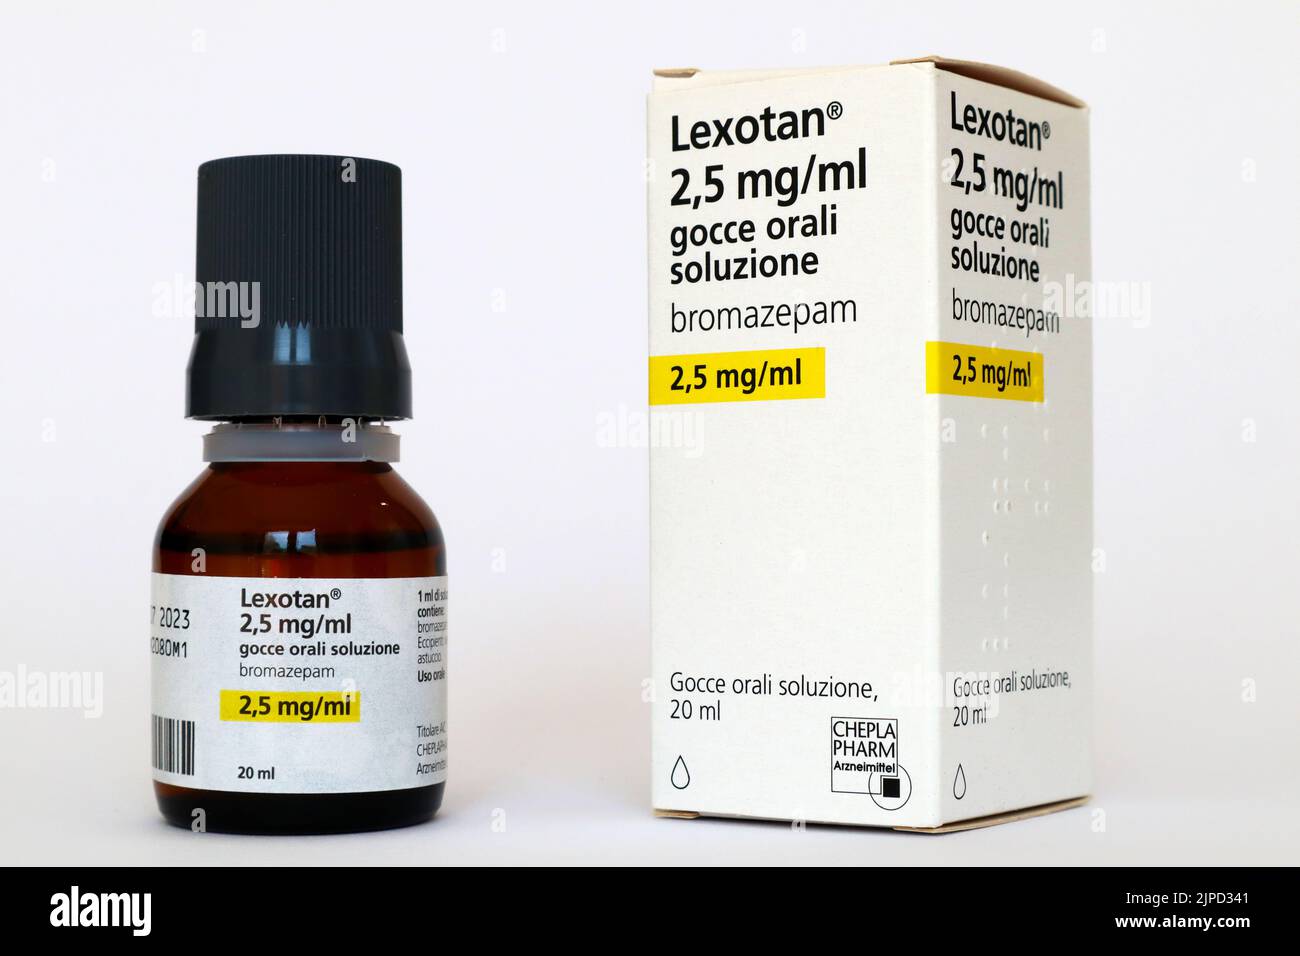 LEXOTAN Bromazepam, a benzodiazepine medicine. Medication used to treat of severe anxiety. Cheplapharm Arzneimittel GmbH Stock Photo